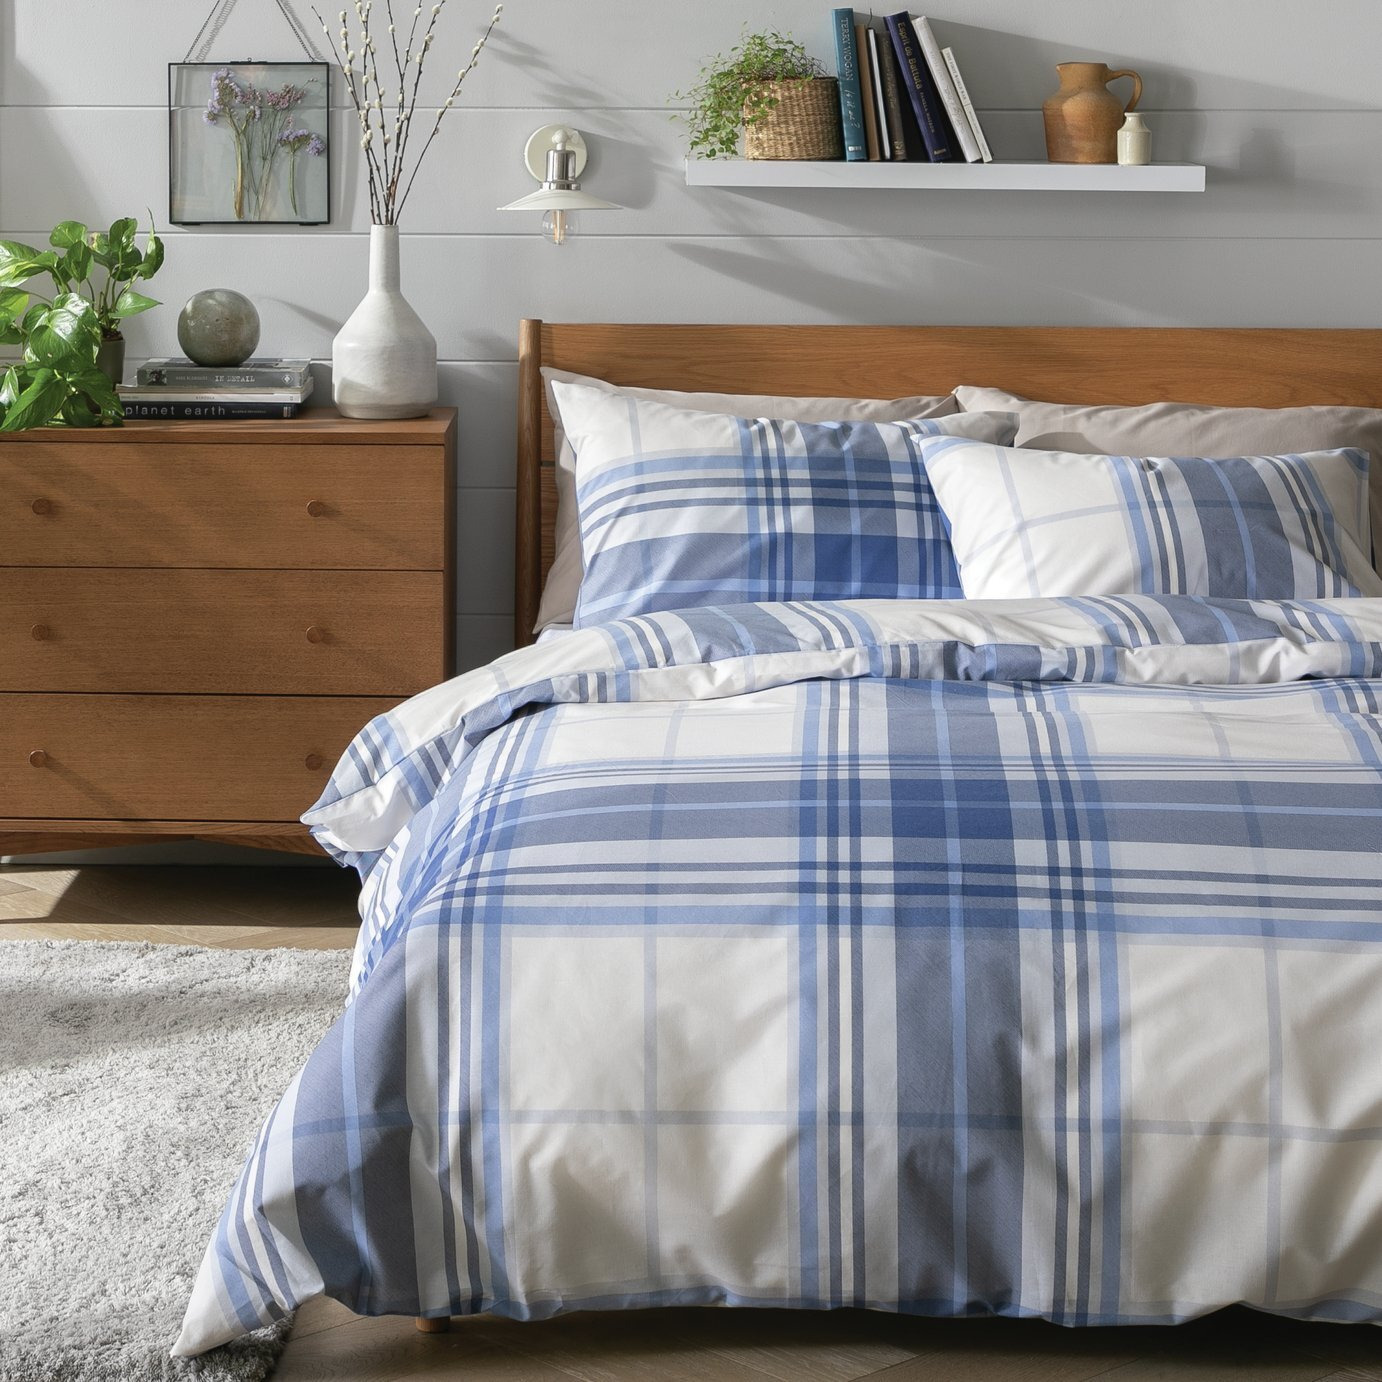 Argos Home Printed Check Blue & White Bedding Set - Single - image 1